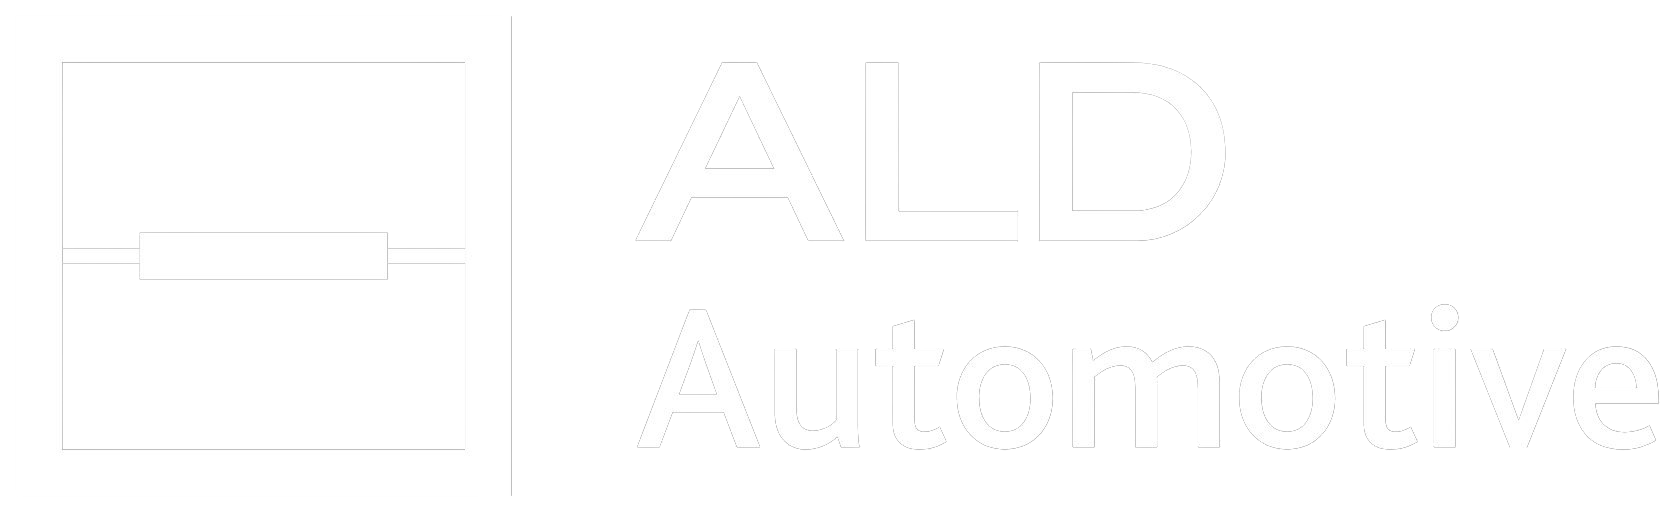 ALD Logo